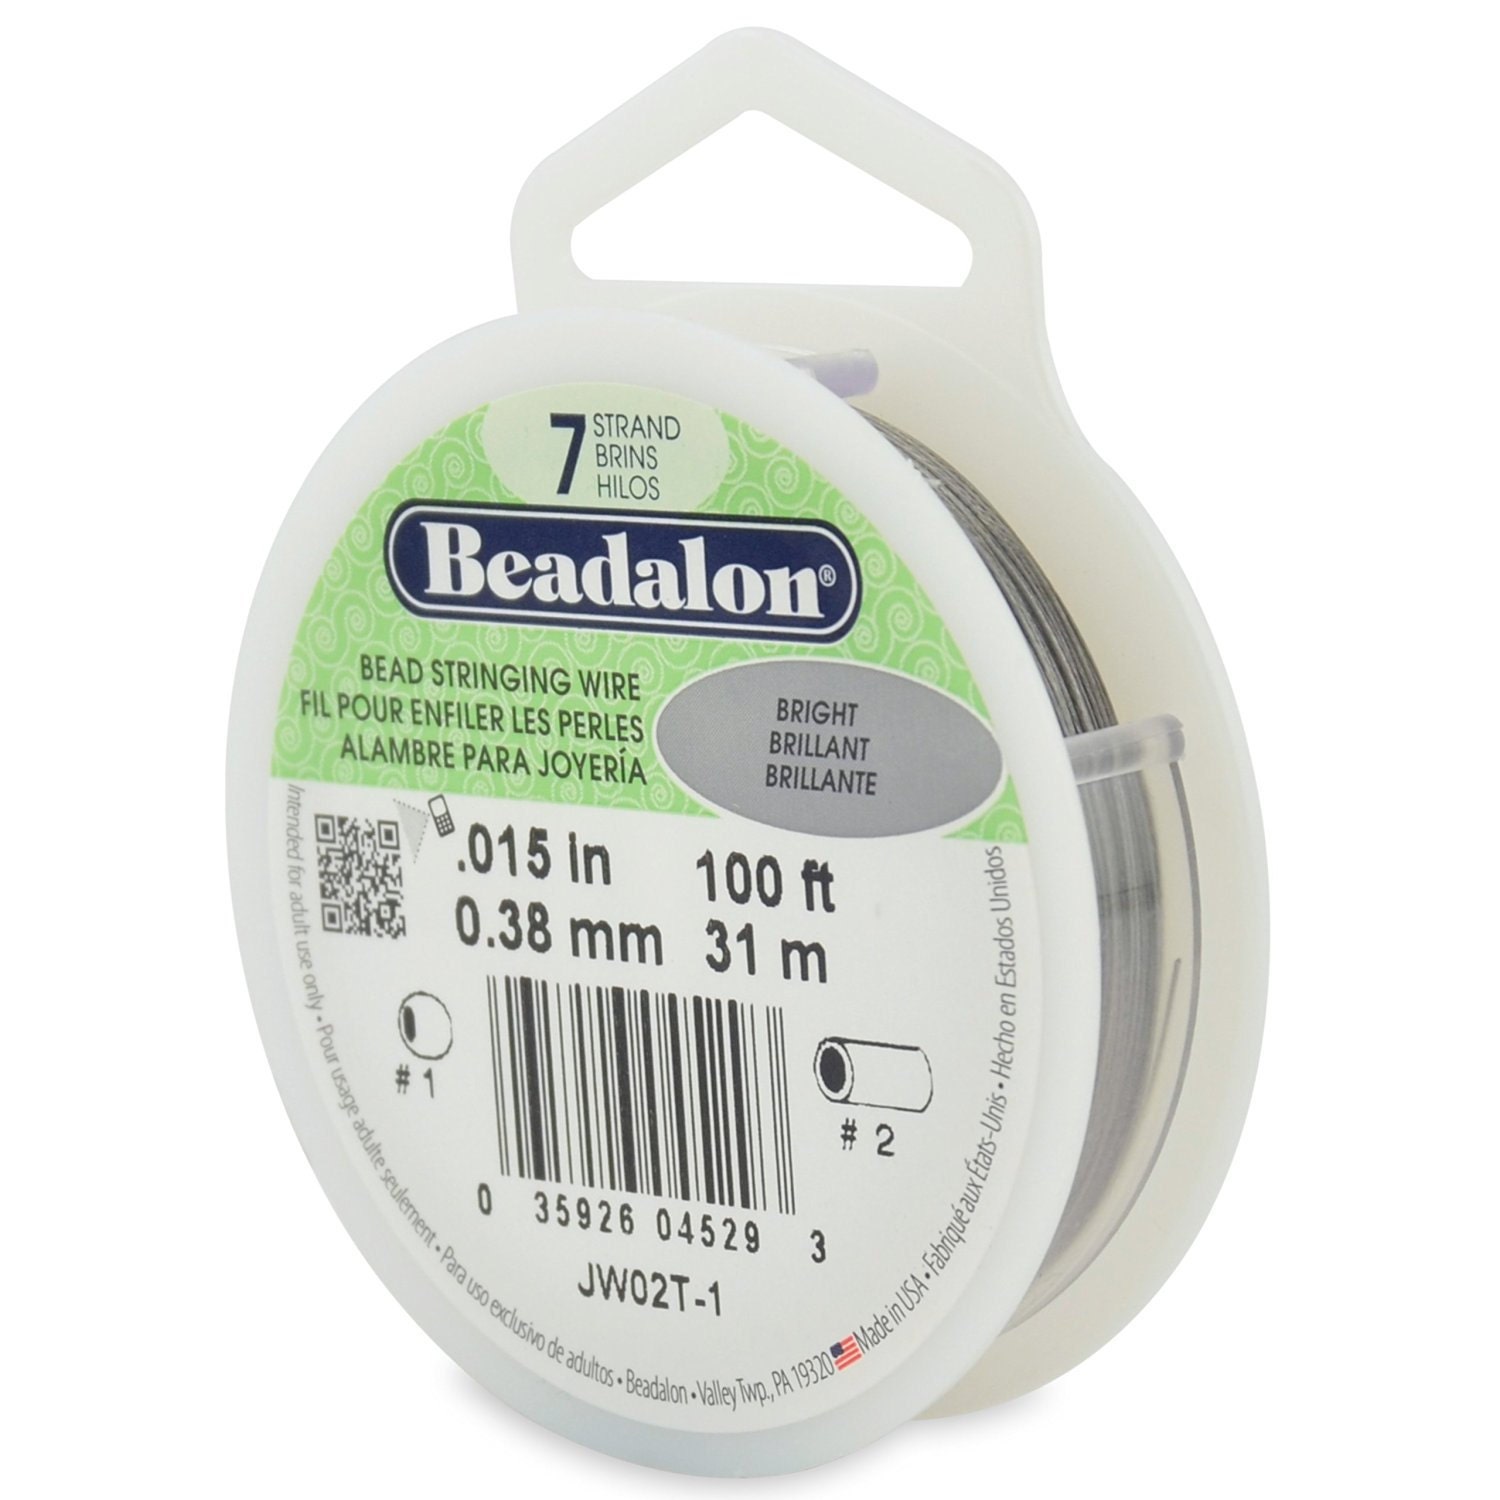 Beadalon Bright .018 7 Strand Wire 100ft.